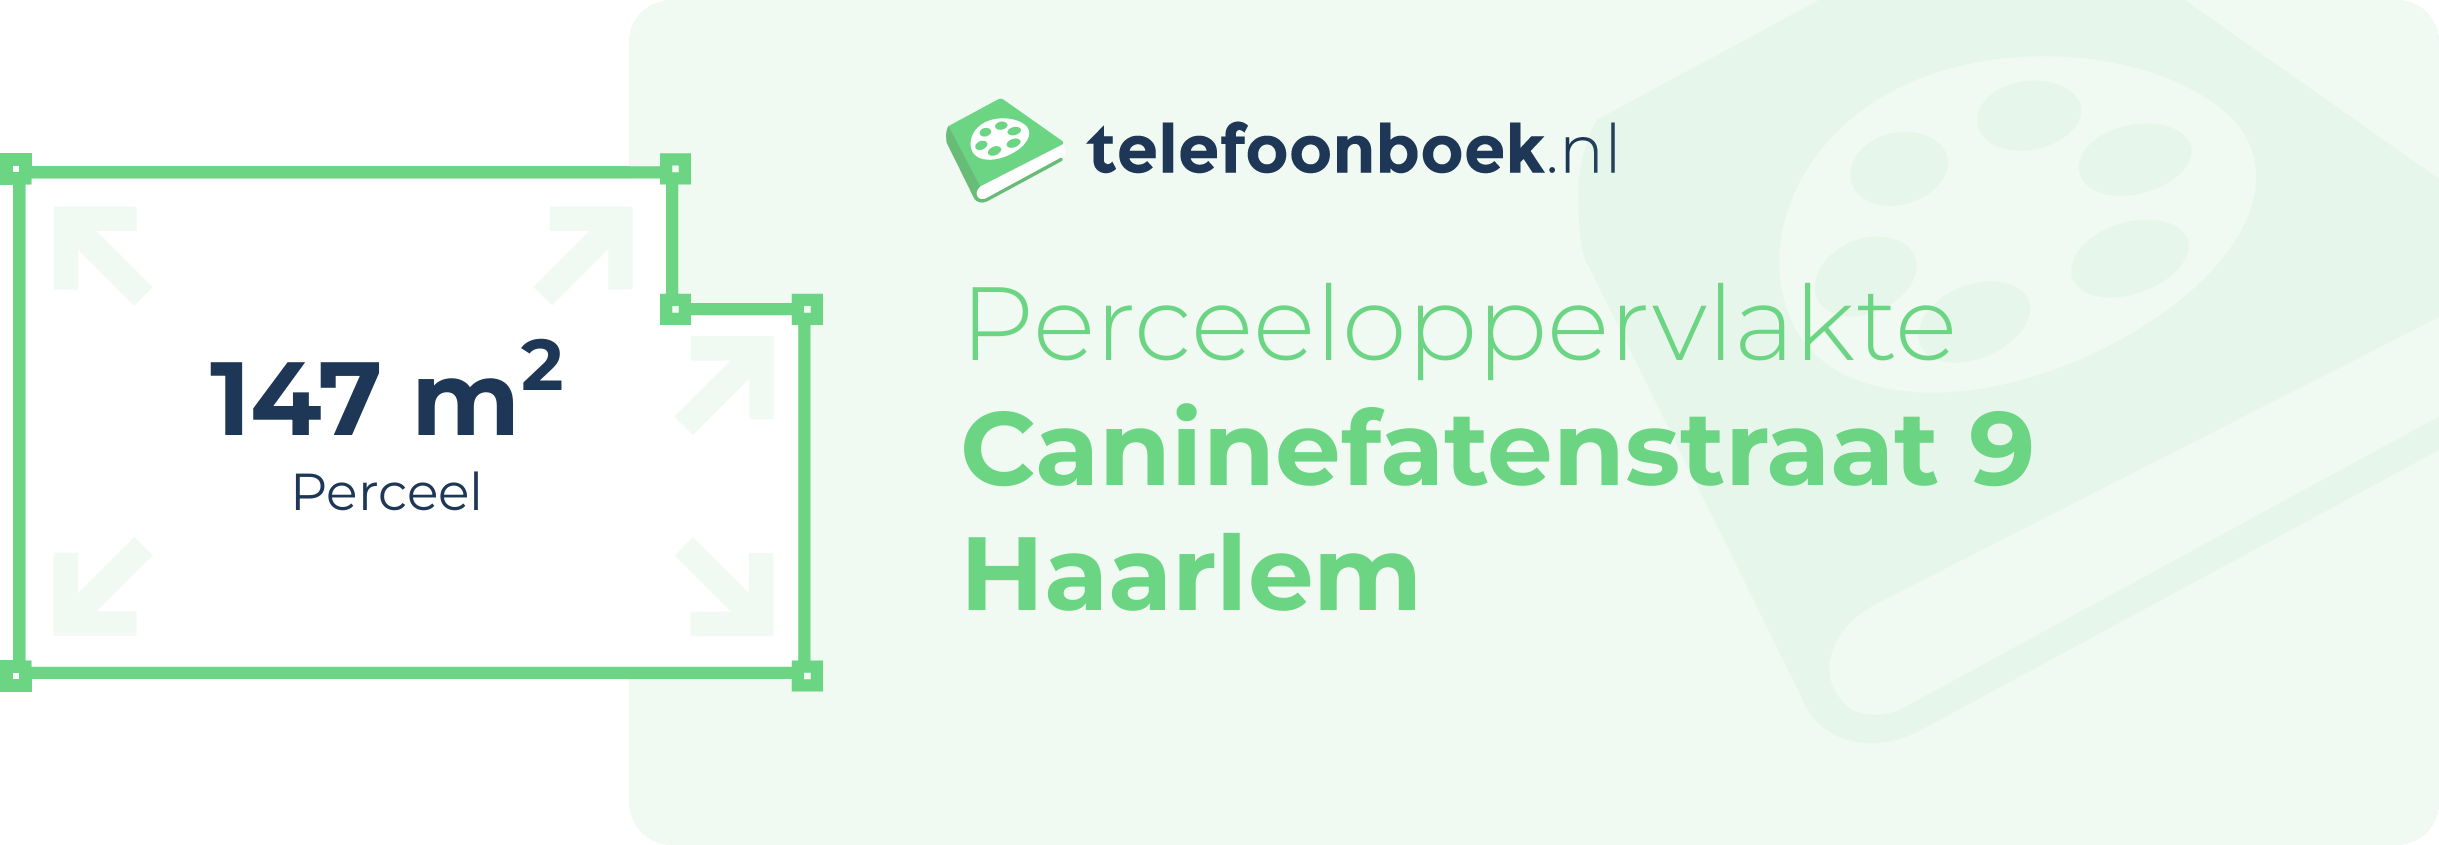 Perceeloppervlakte Caninefatenstraat 9 Haarlem